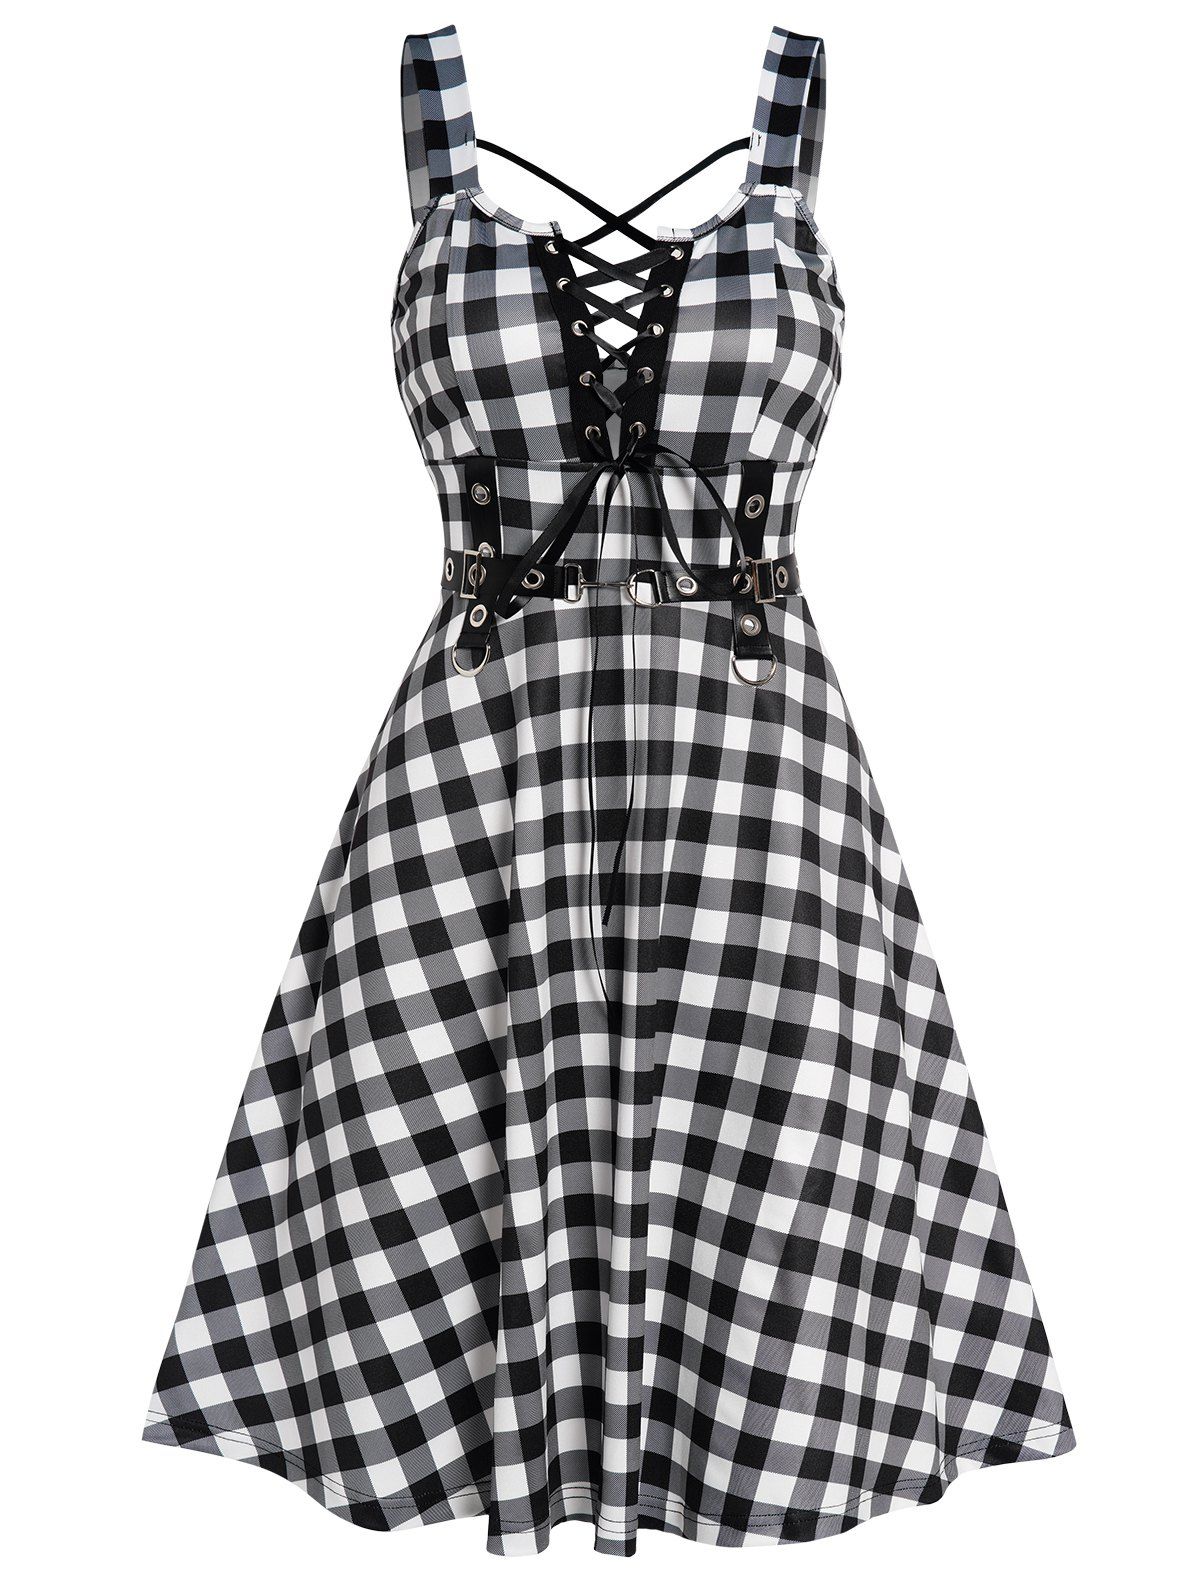 Plaid Print Dress Crisscross Lace Up Grommet High Waisted Sleeveless A Line Mini Dress - BLACK S